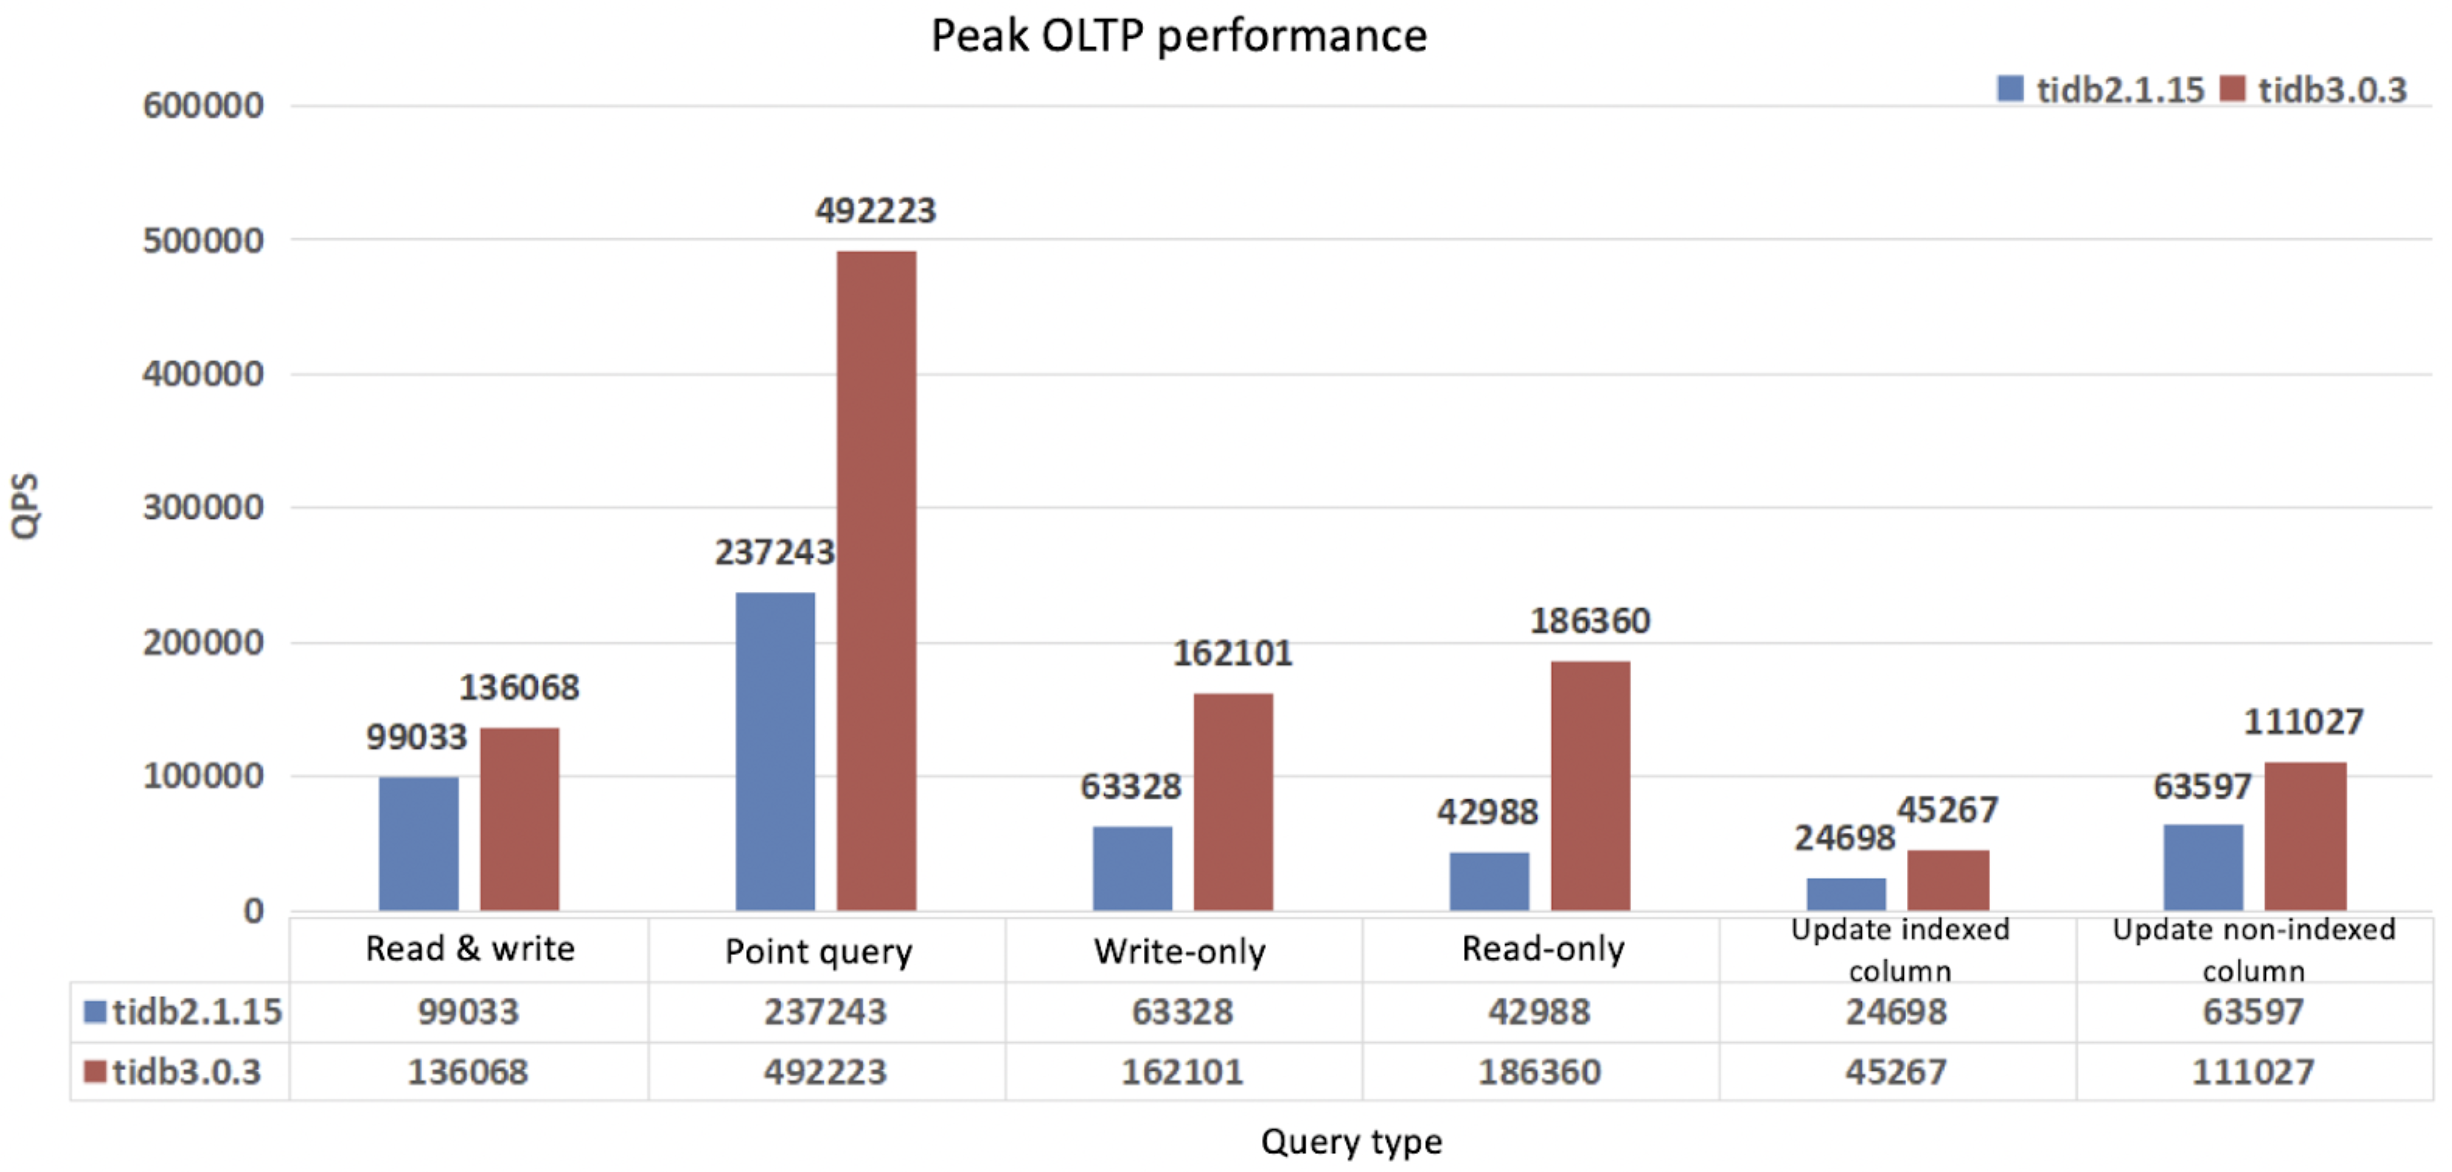 Peak OLTP performance comparison